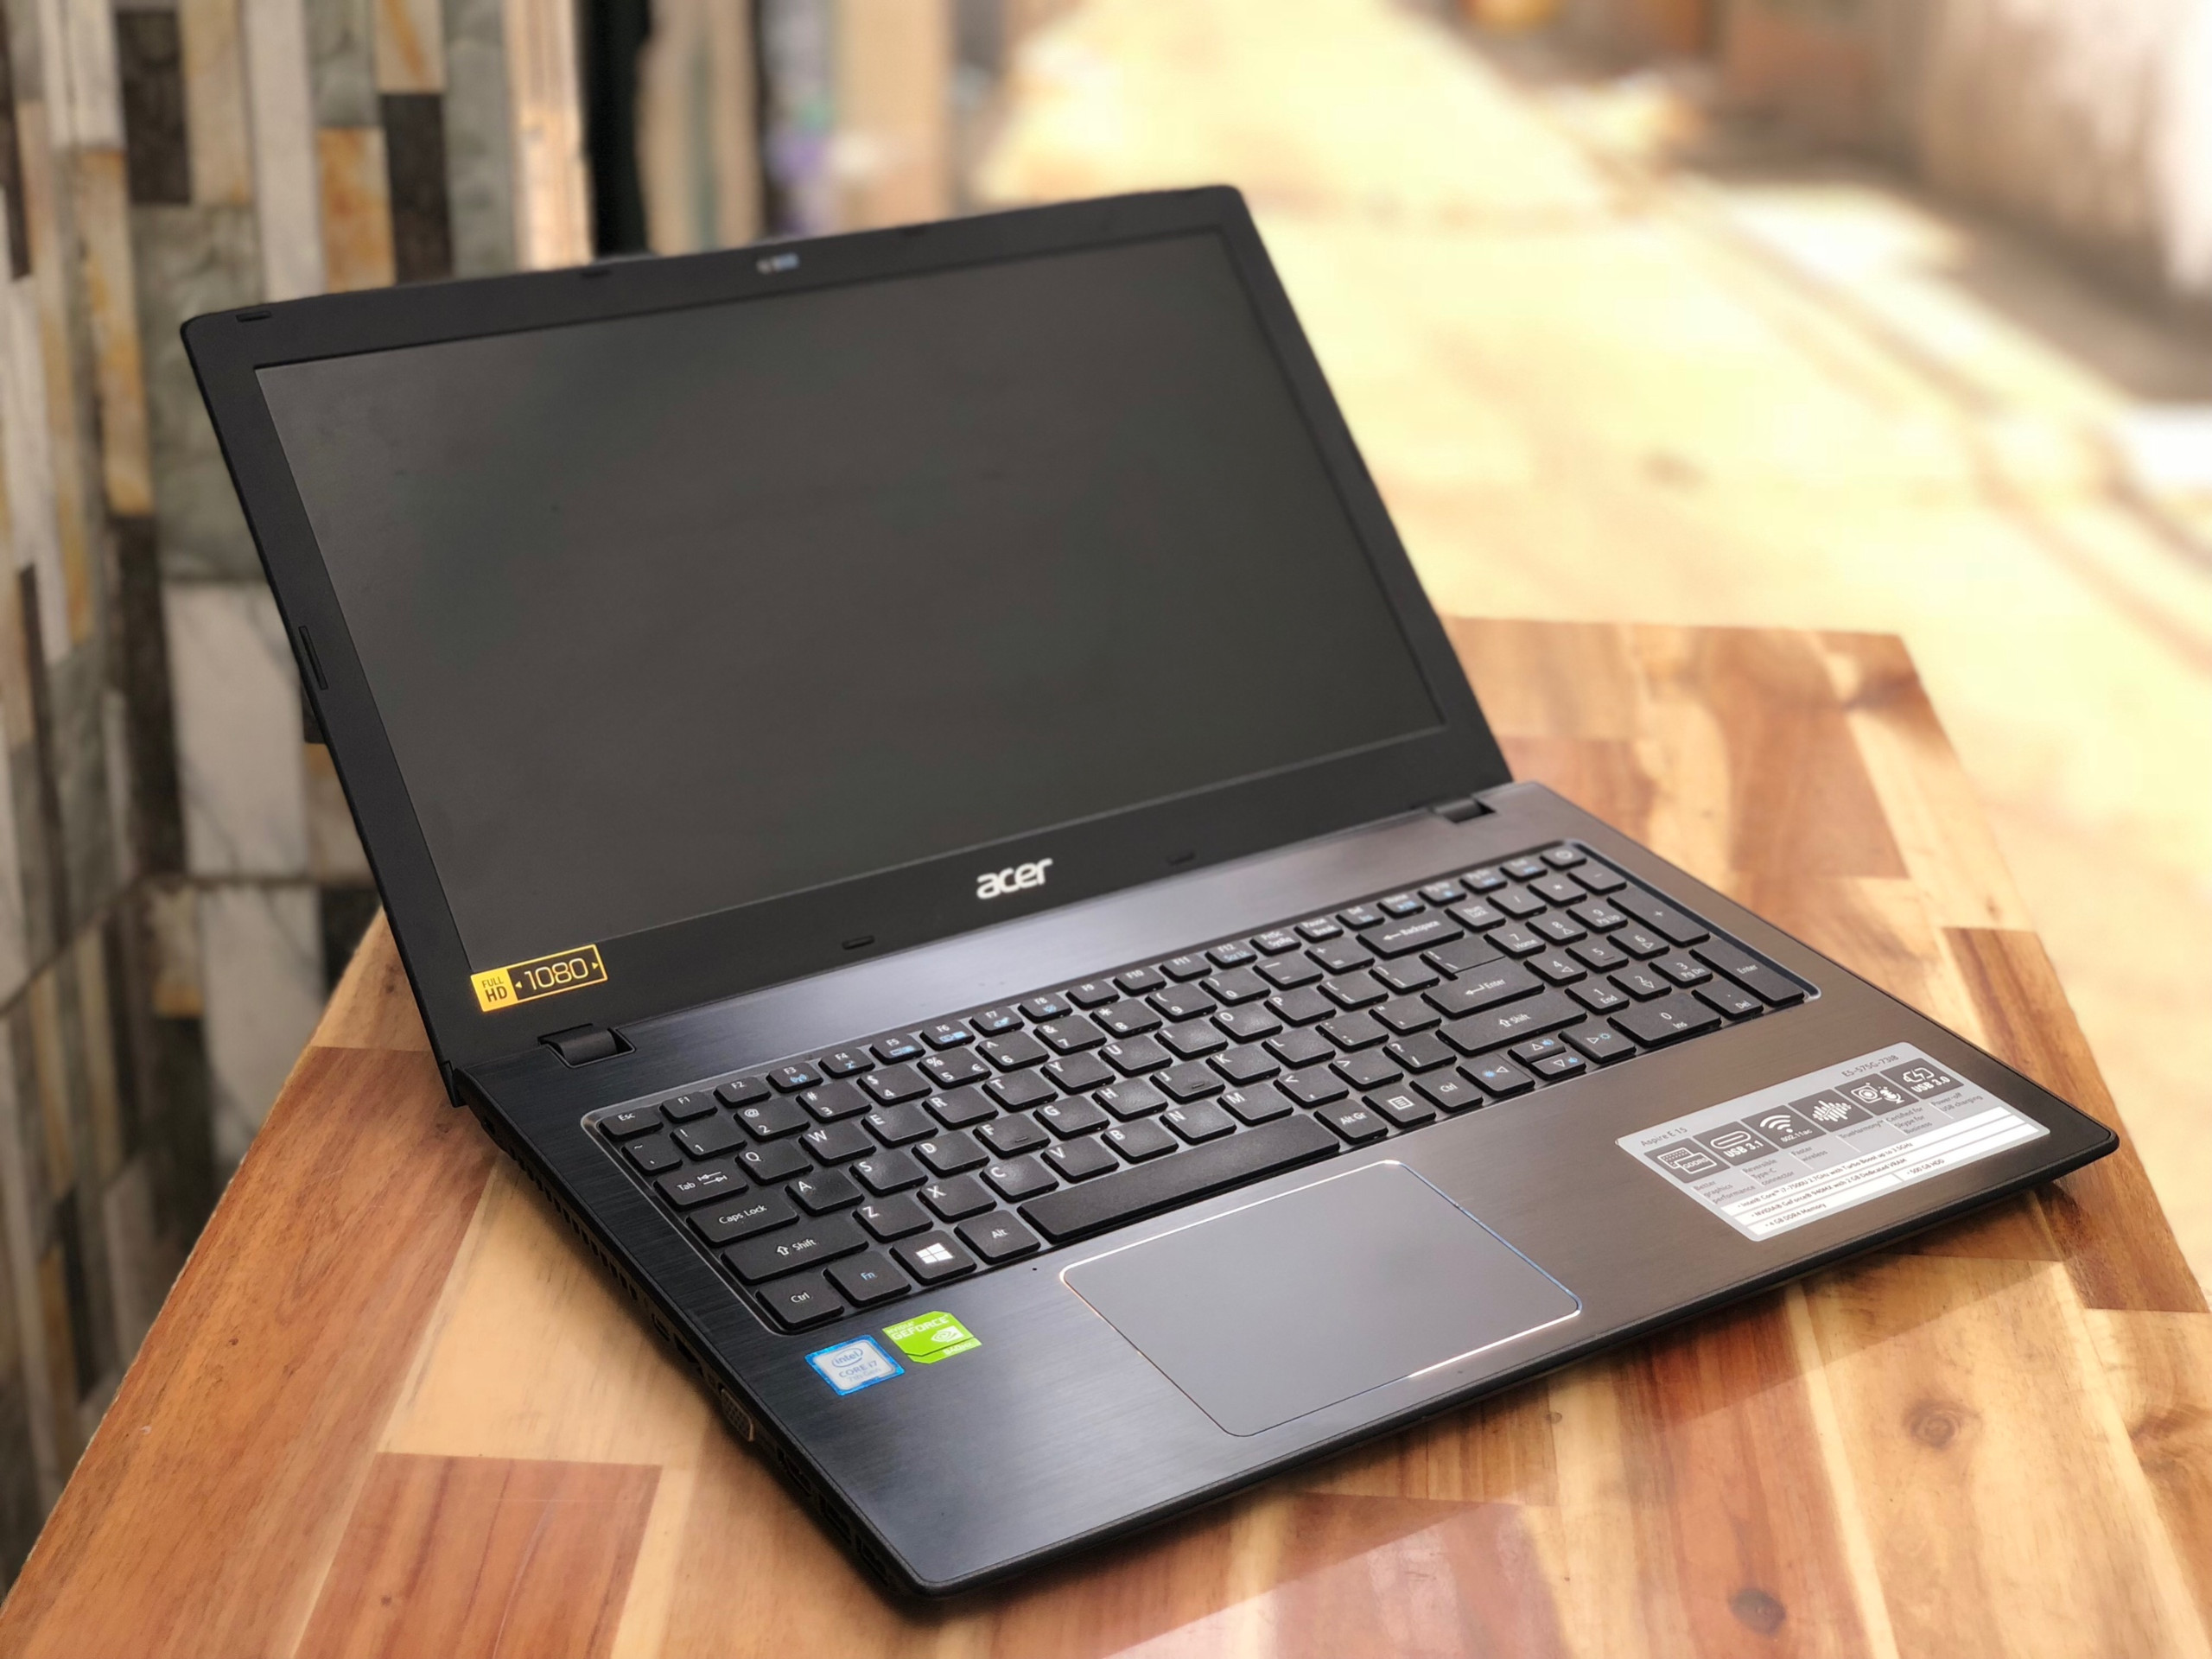 Laptop Acer E5-575G-39QW, i3 7100U 4G 500G Vga GT940MX Full HD Like new zin 100% Giá rẻ2